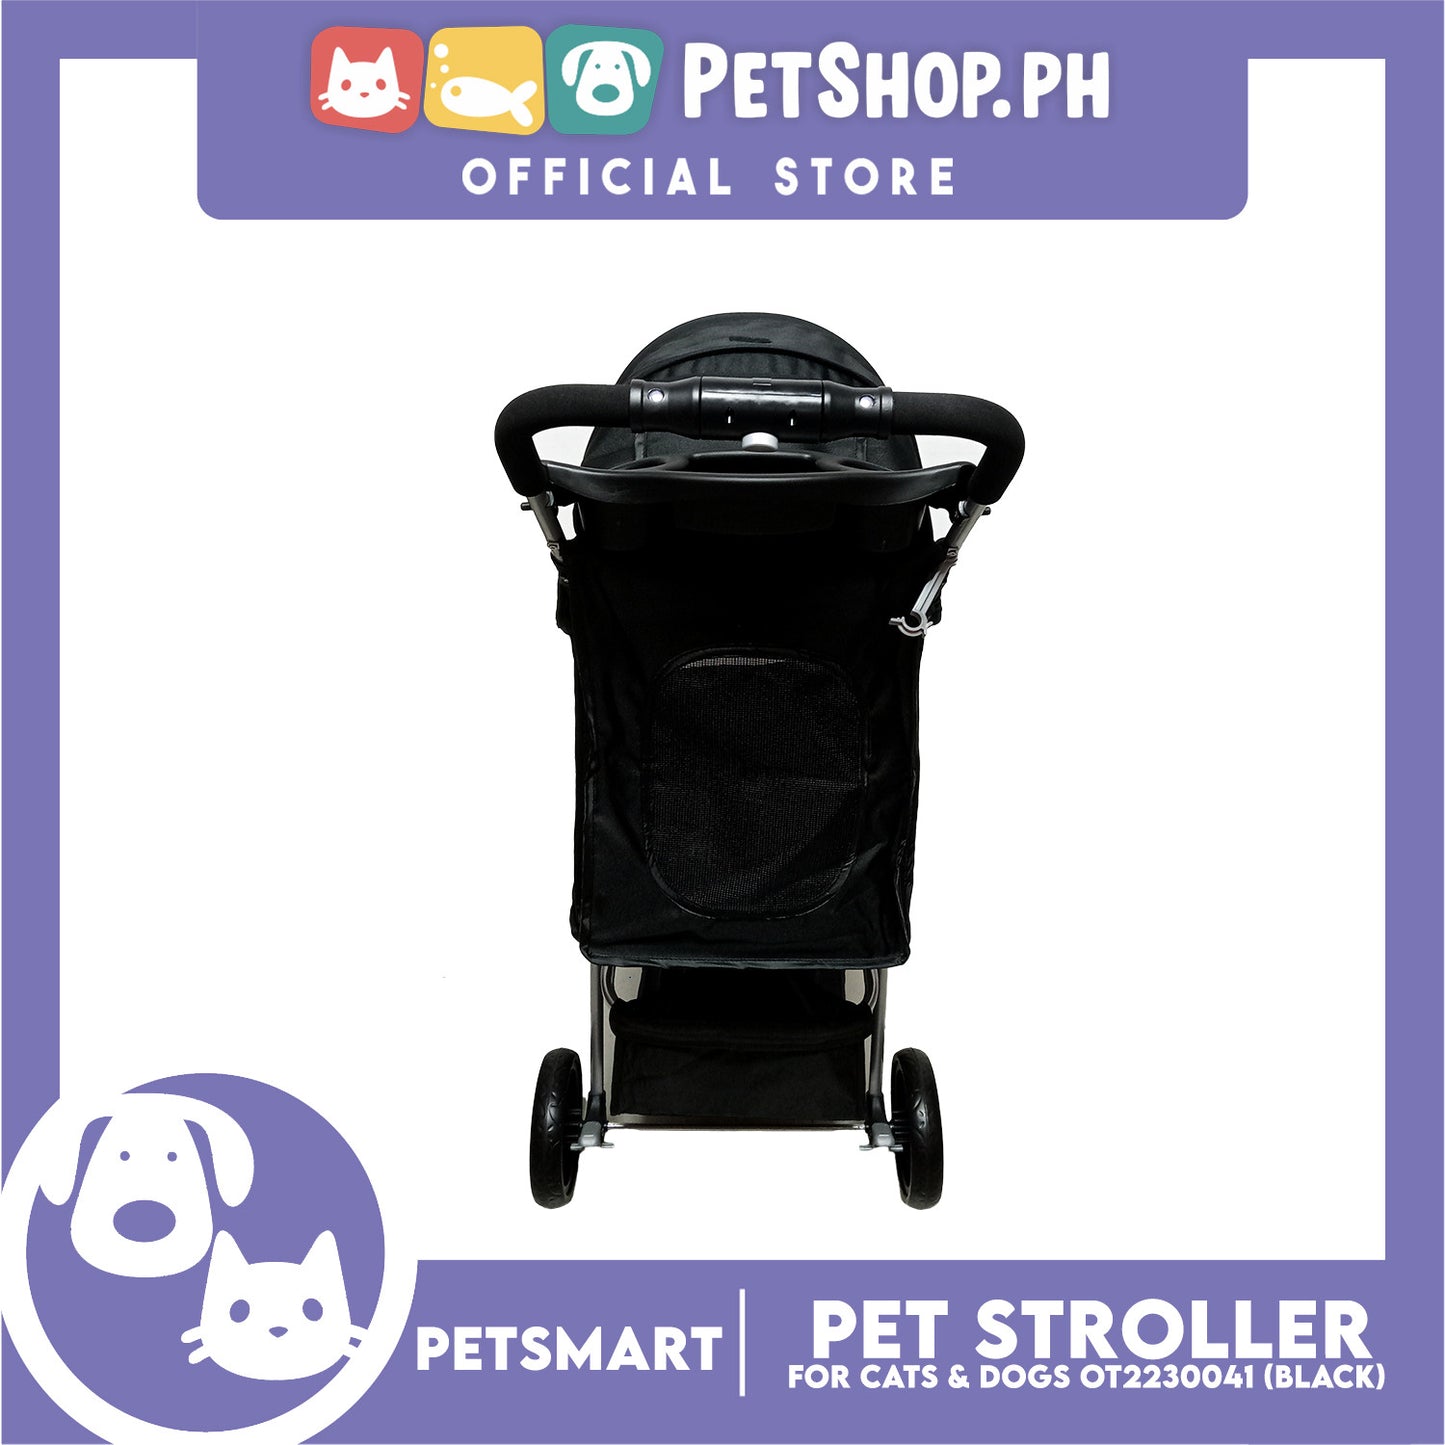 Pet Stroller 3 Wheels for Cats and Dogs, Black Color (OT2230041) 36cm x 73cm x 105cm